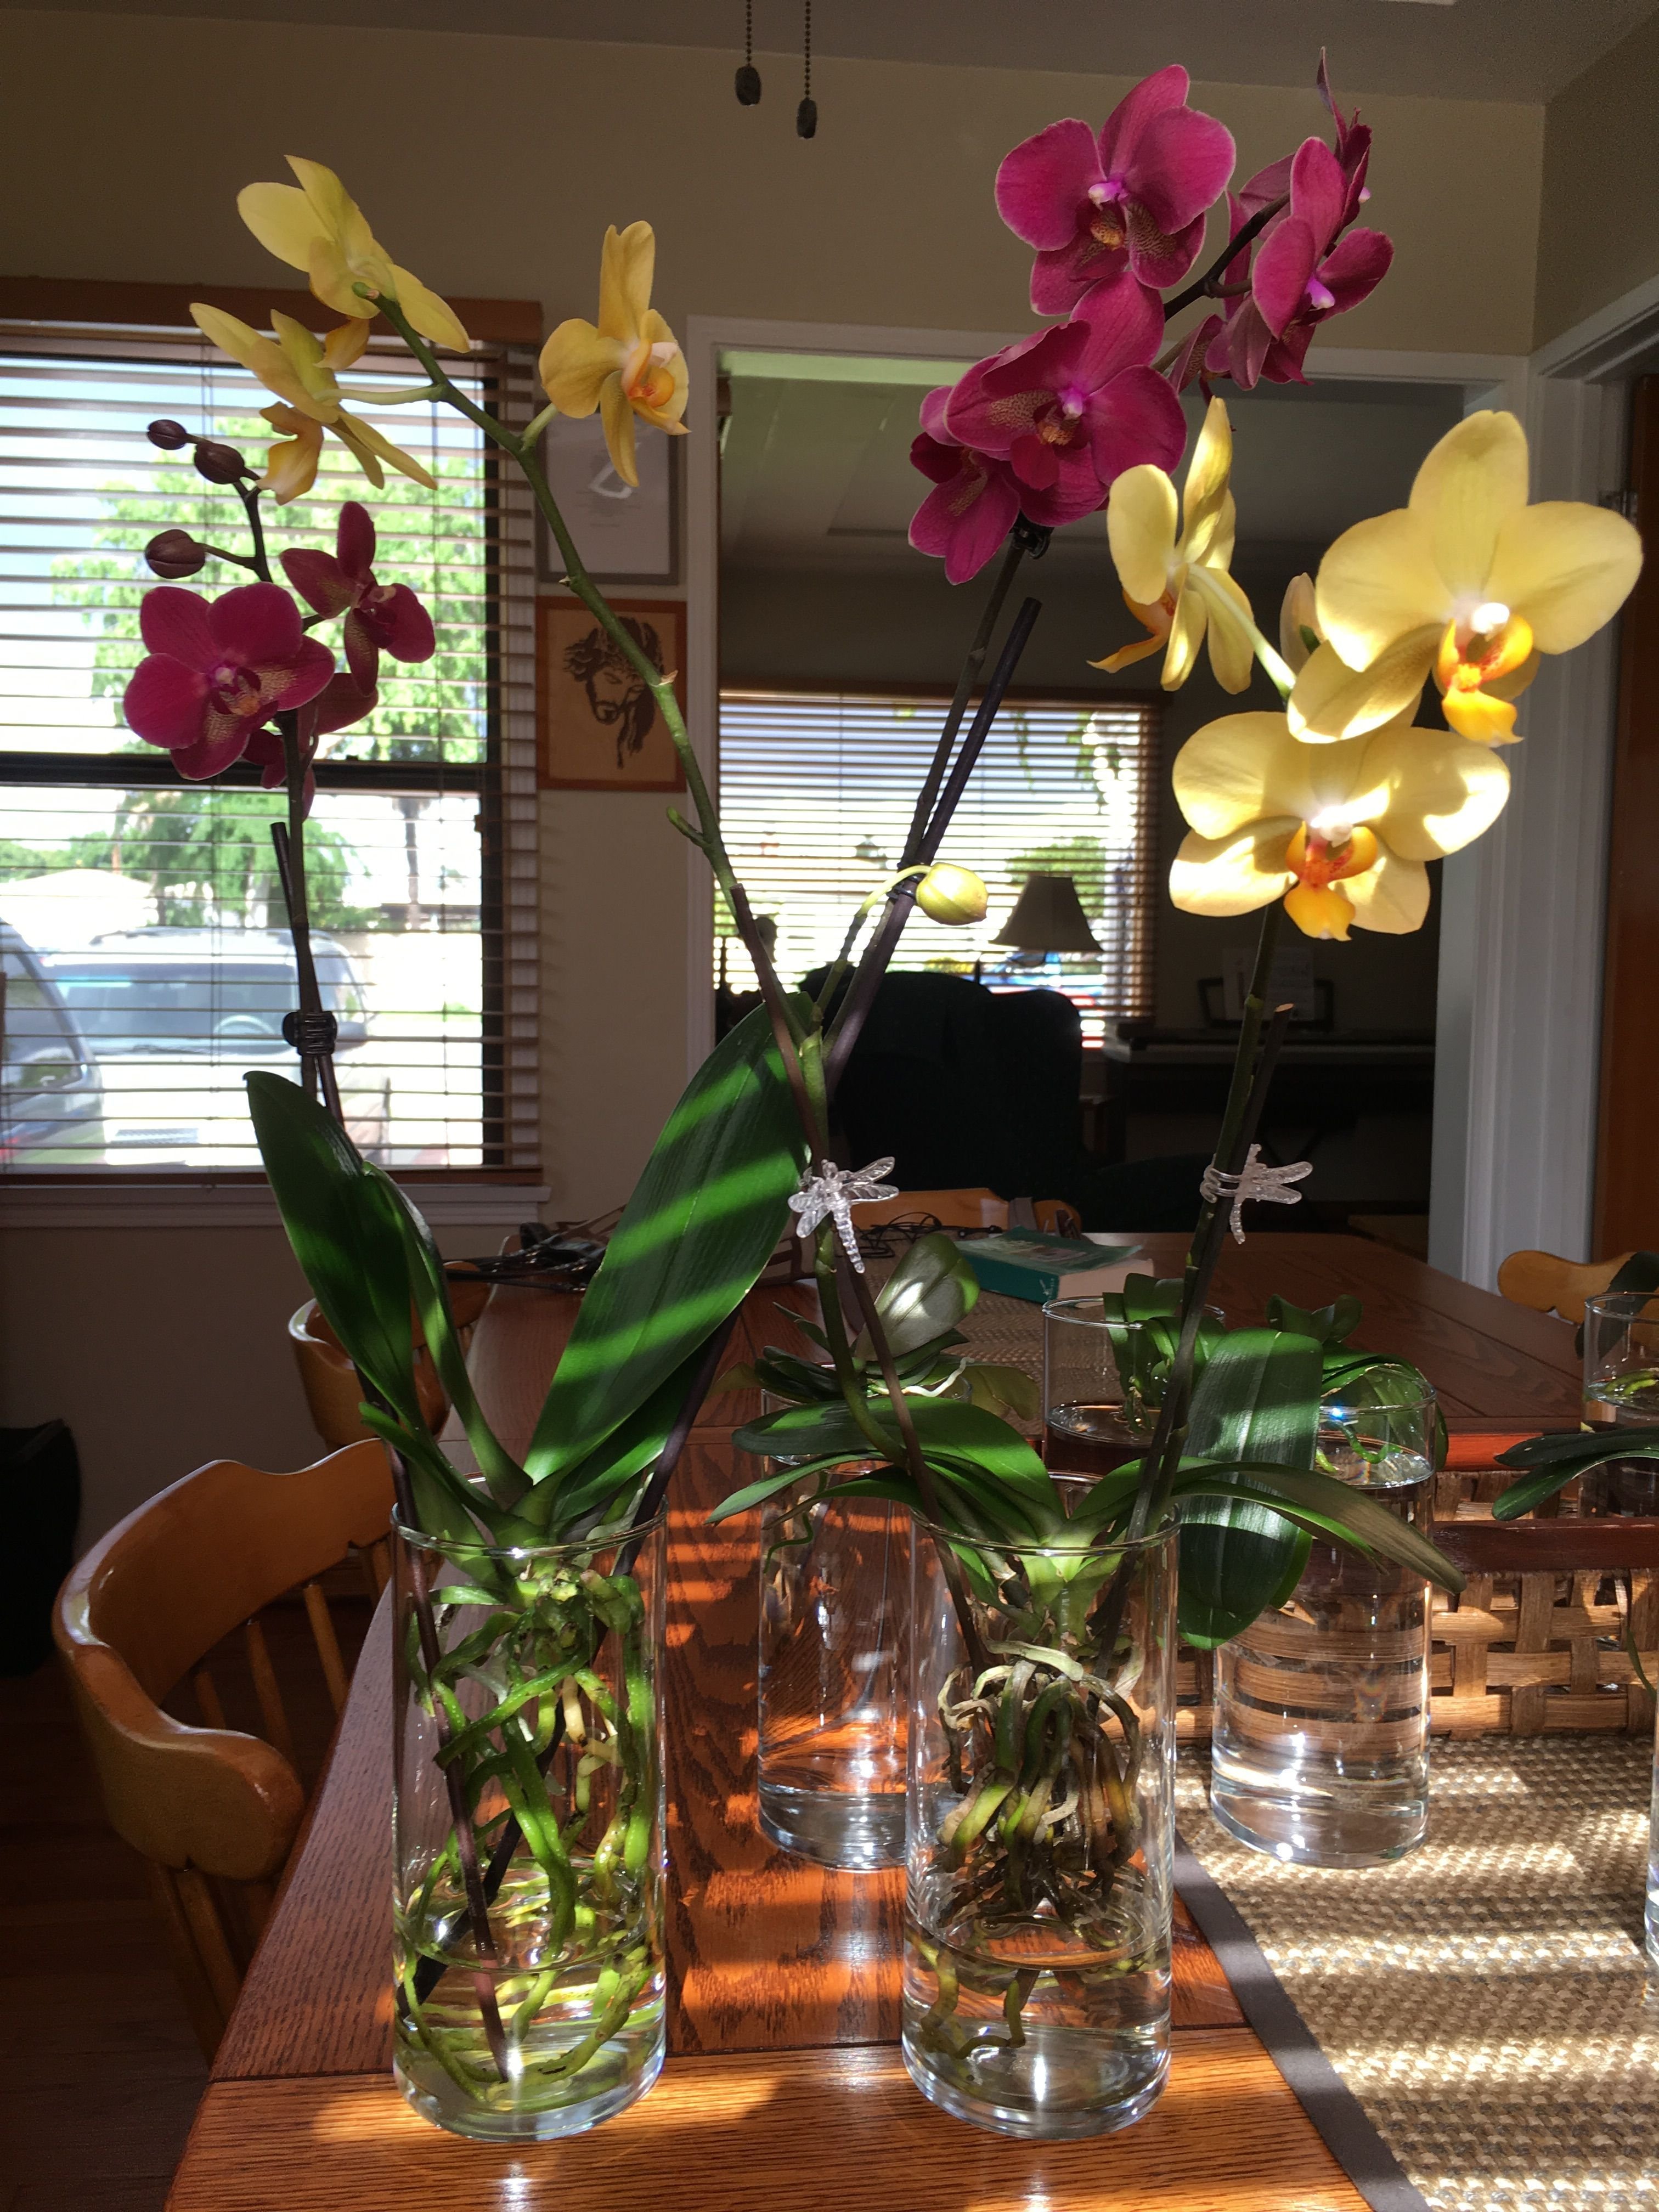 Орхидея в домашних условиях в воде. Фаленопсис на гидропонике. Орхидеи в доме. Орхидея растет. Фаленопсис в воде.